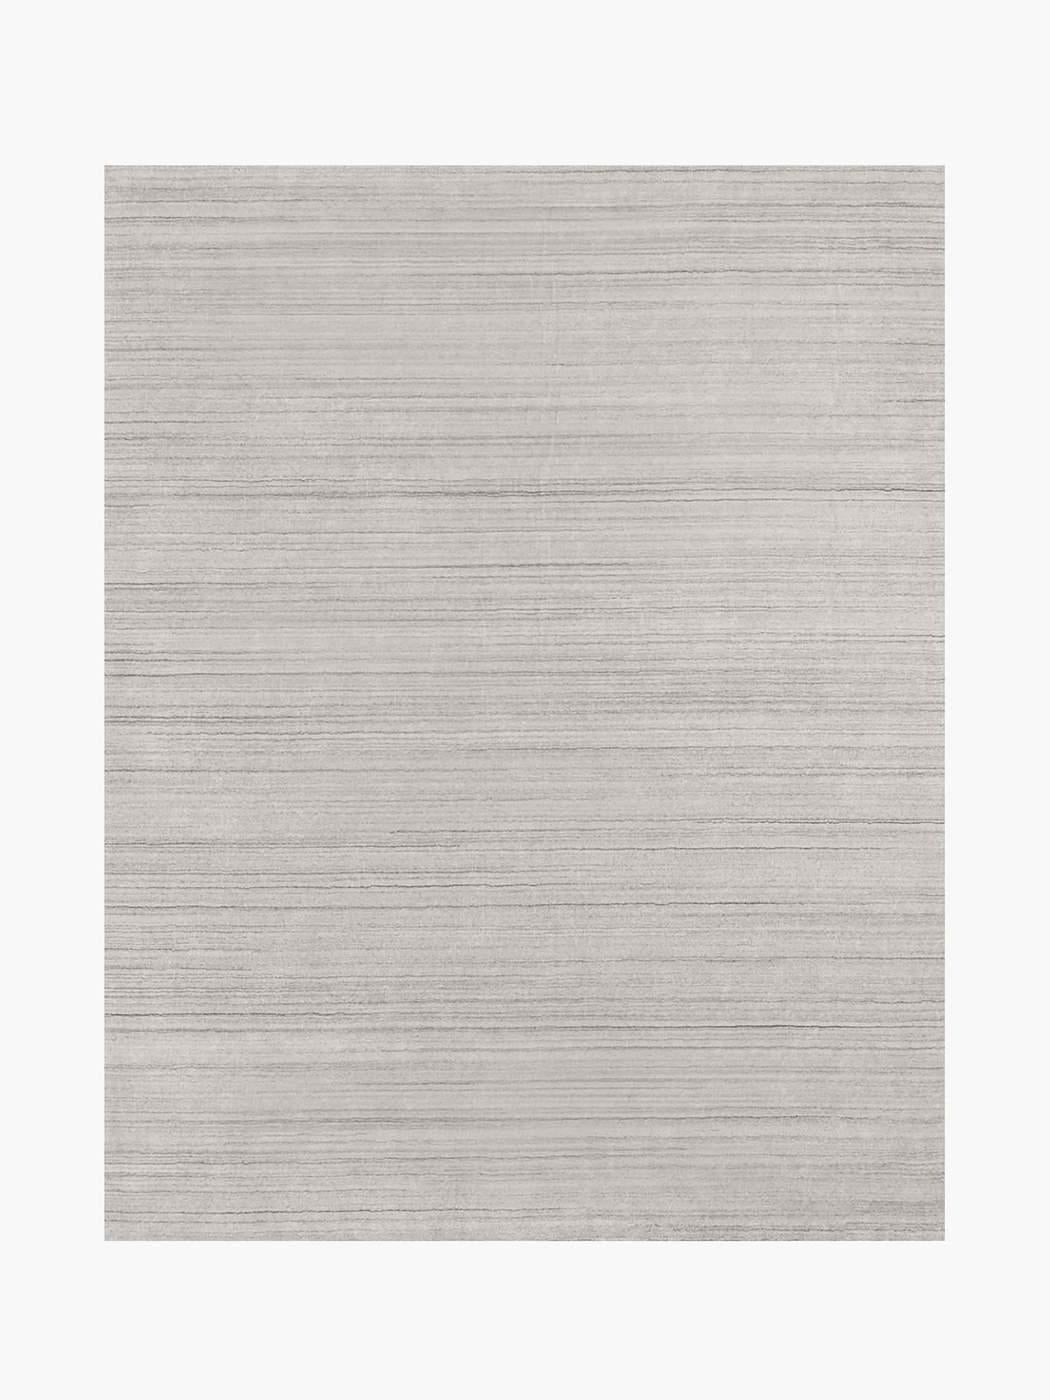 For Sale: Beige (Performance Savilla Sand) Ben Soleimani Performance Savilla Rug– Hand-knotted Medium Pile White 12'x18'